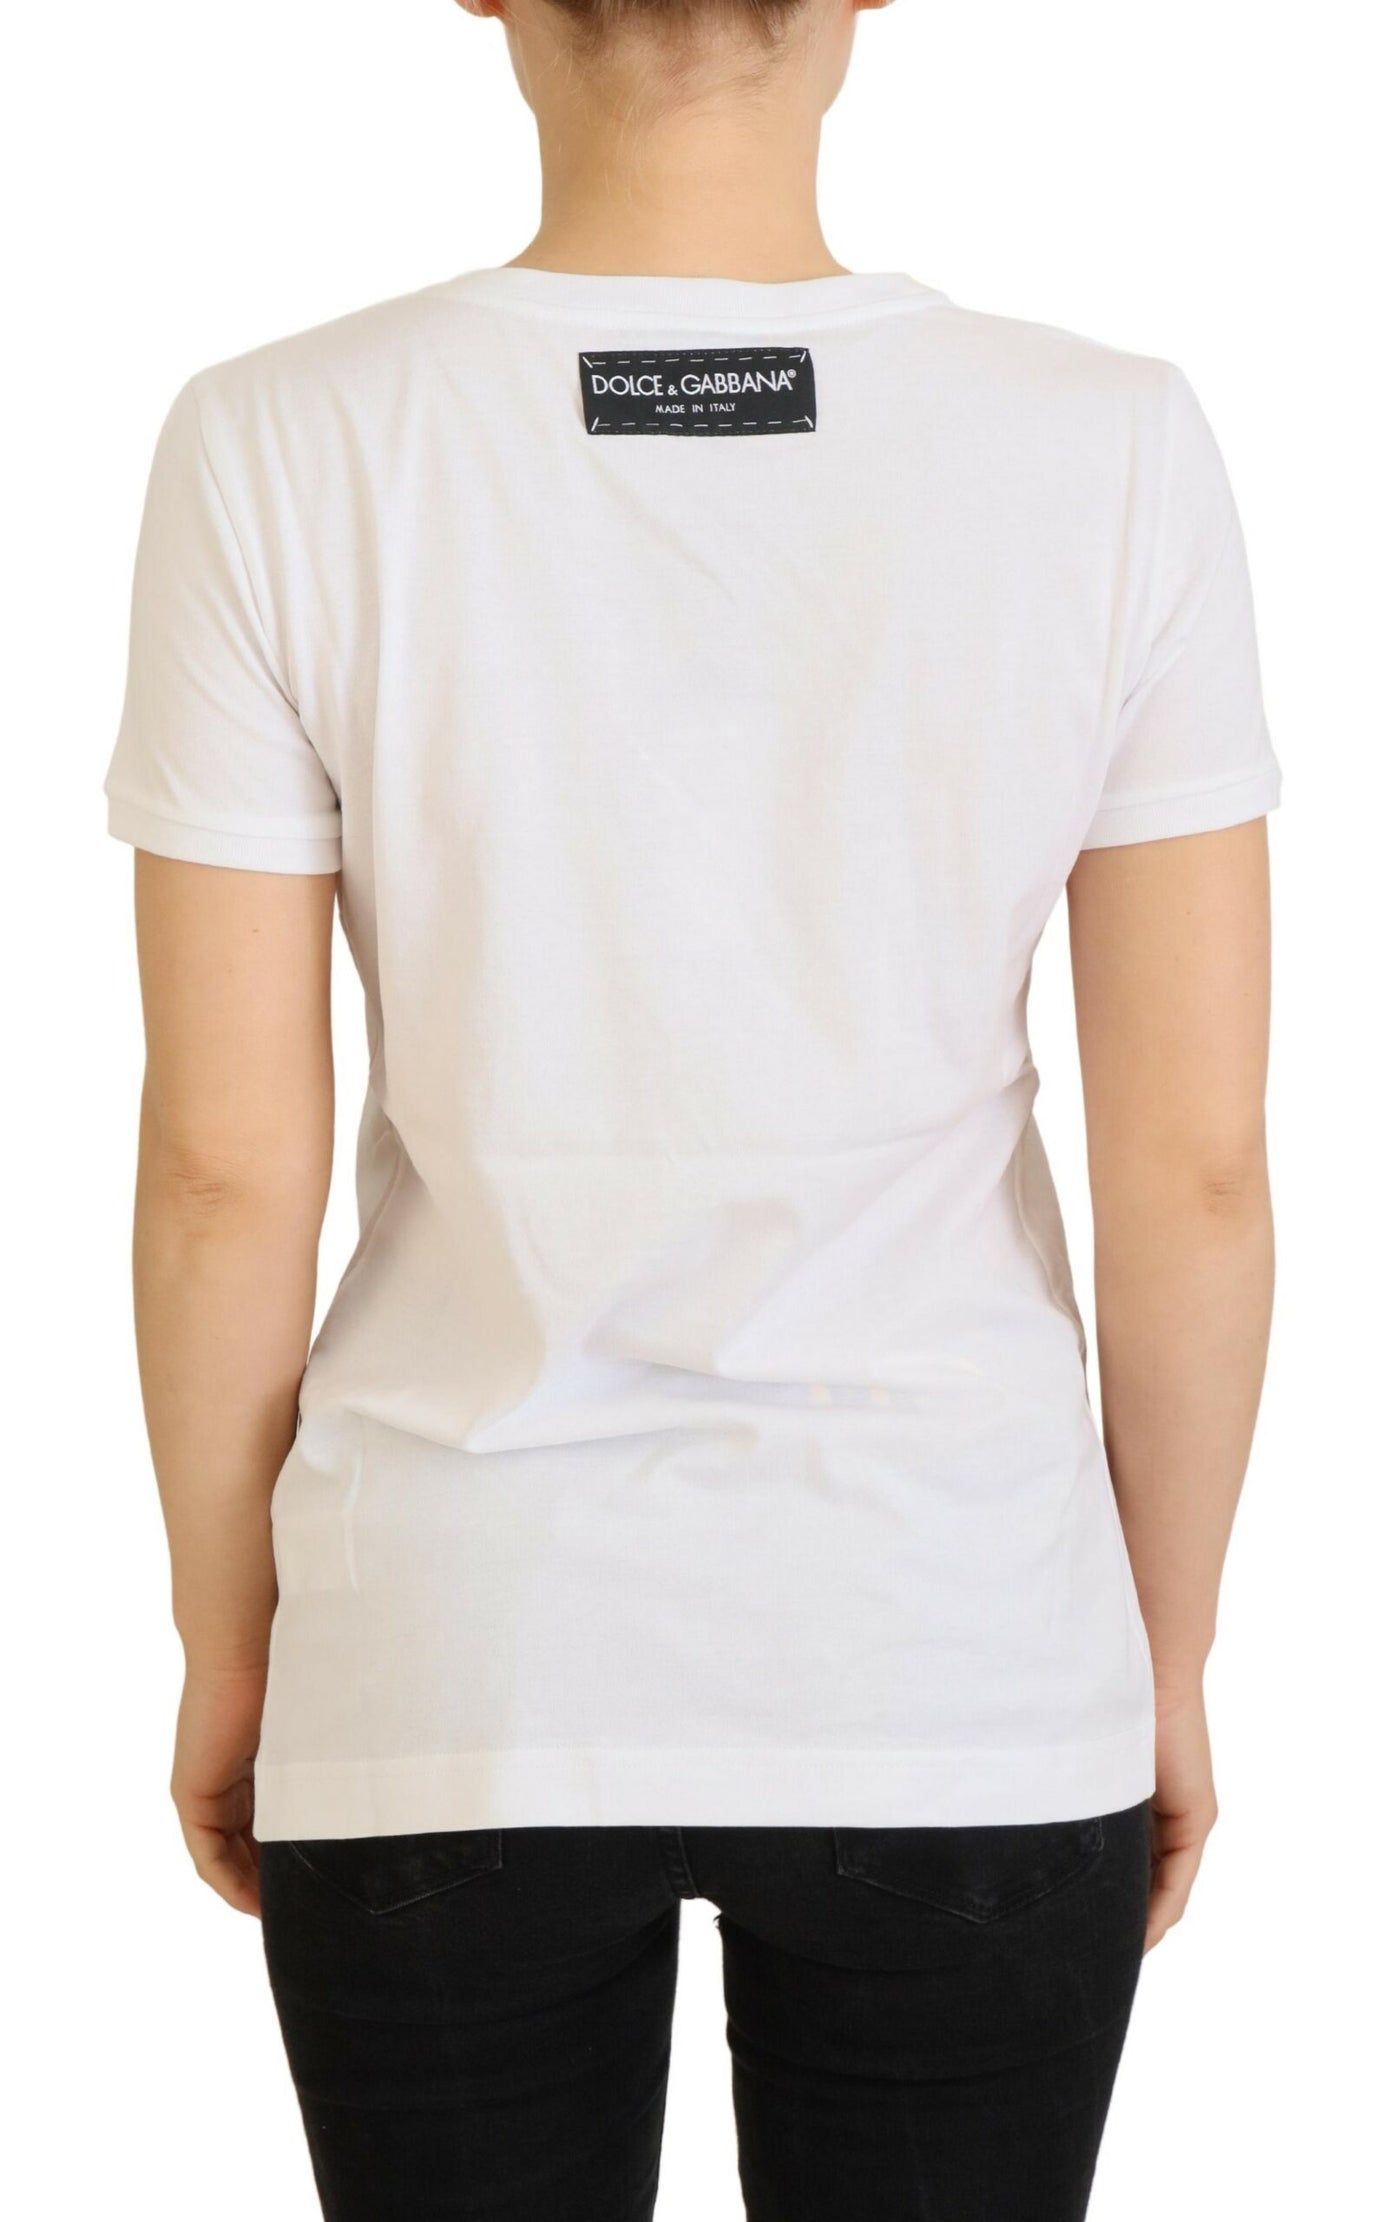 Dolce & Gabbana T-shirt Top White Textured Short Sleeve